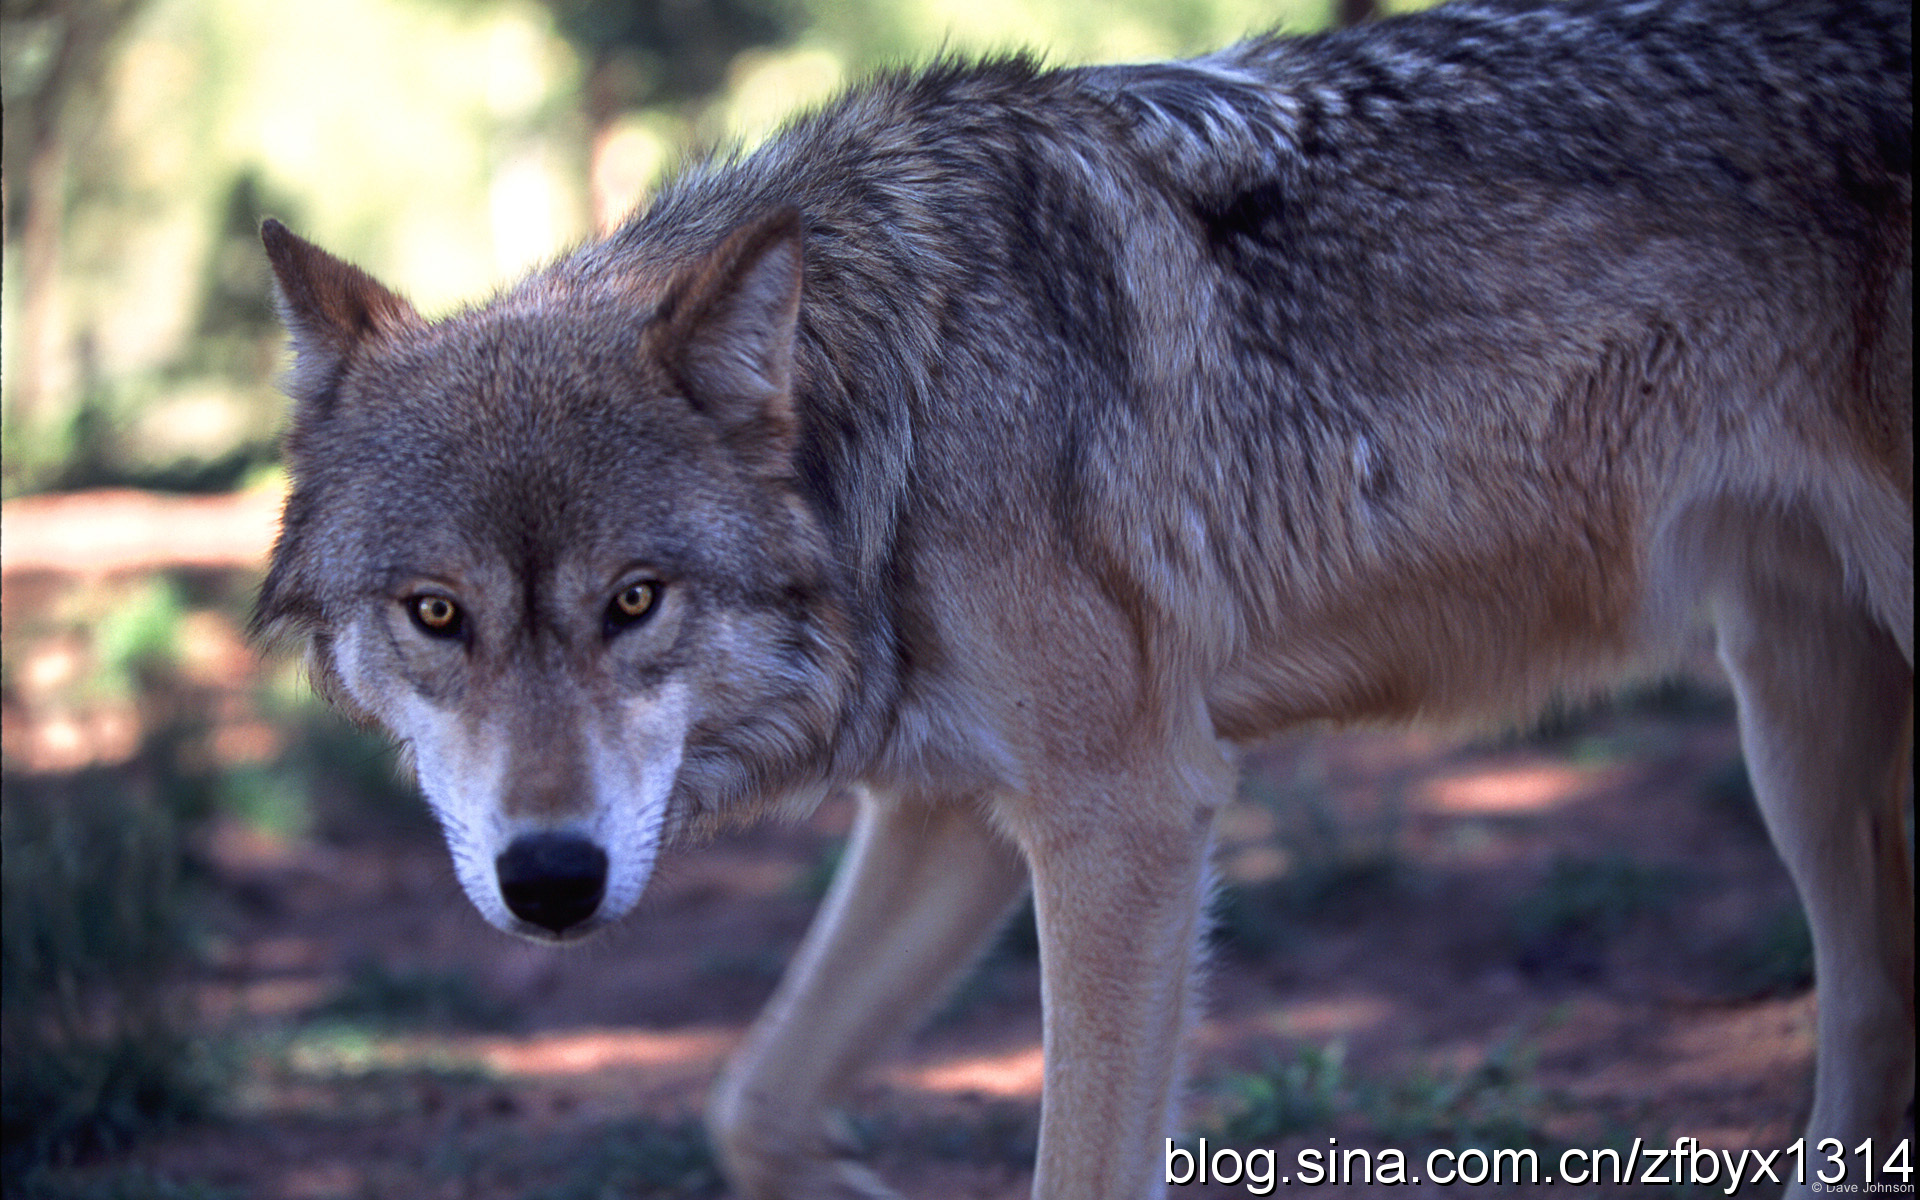 Gray wolf in wildlife sanctuary